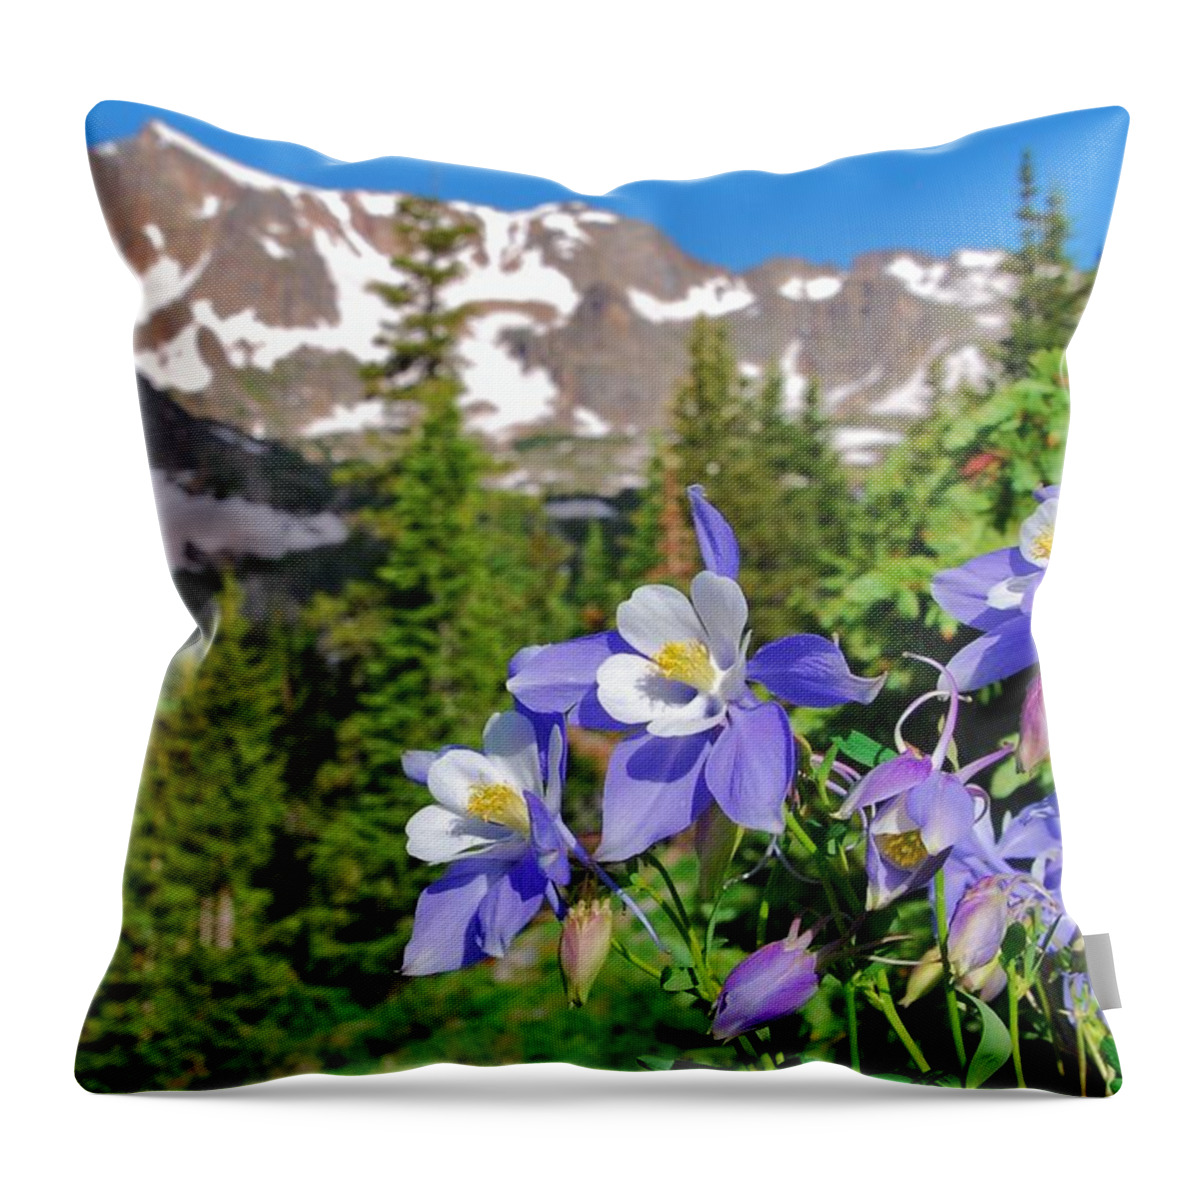 Blue Columbine Throw Pillow featuring the photograph Colorado Blue Columbine by Cascade Colors